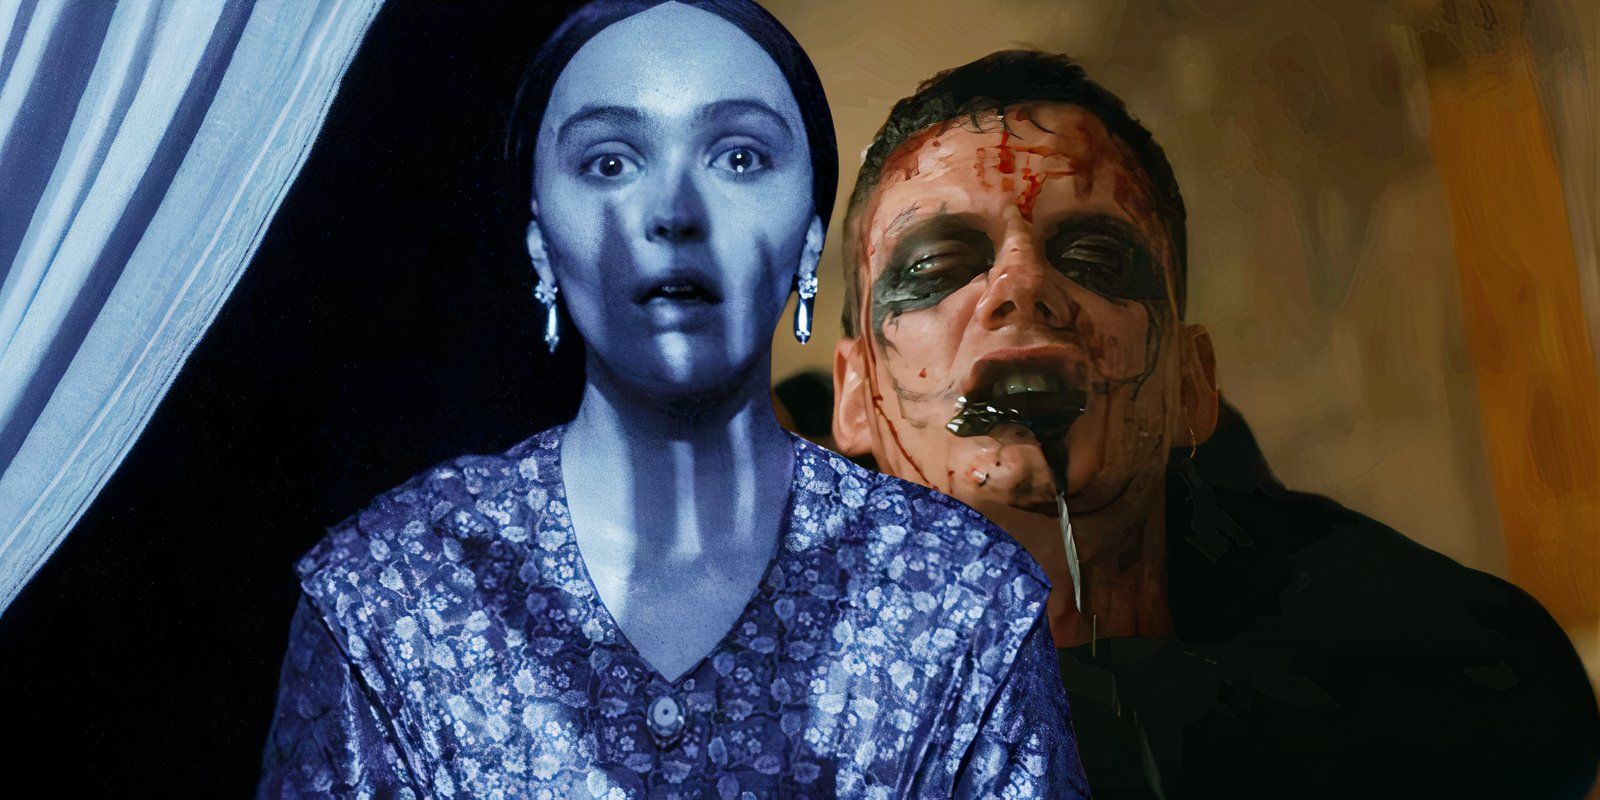 Lily Rose Depp in Nosferatu juxtaposed with Bill Skarsgård in The Crow remake